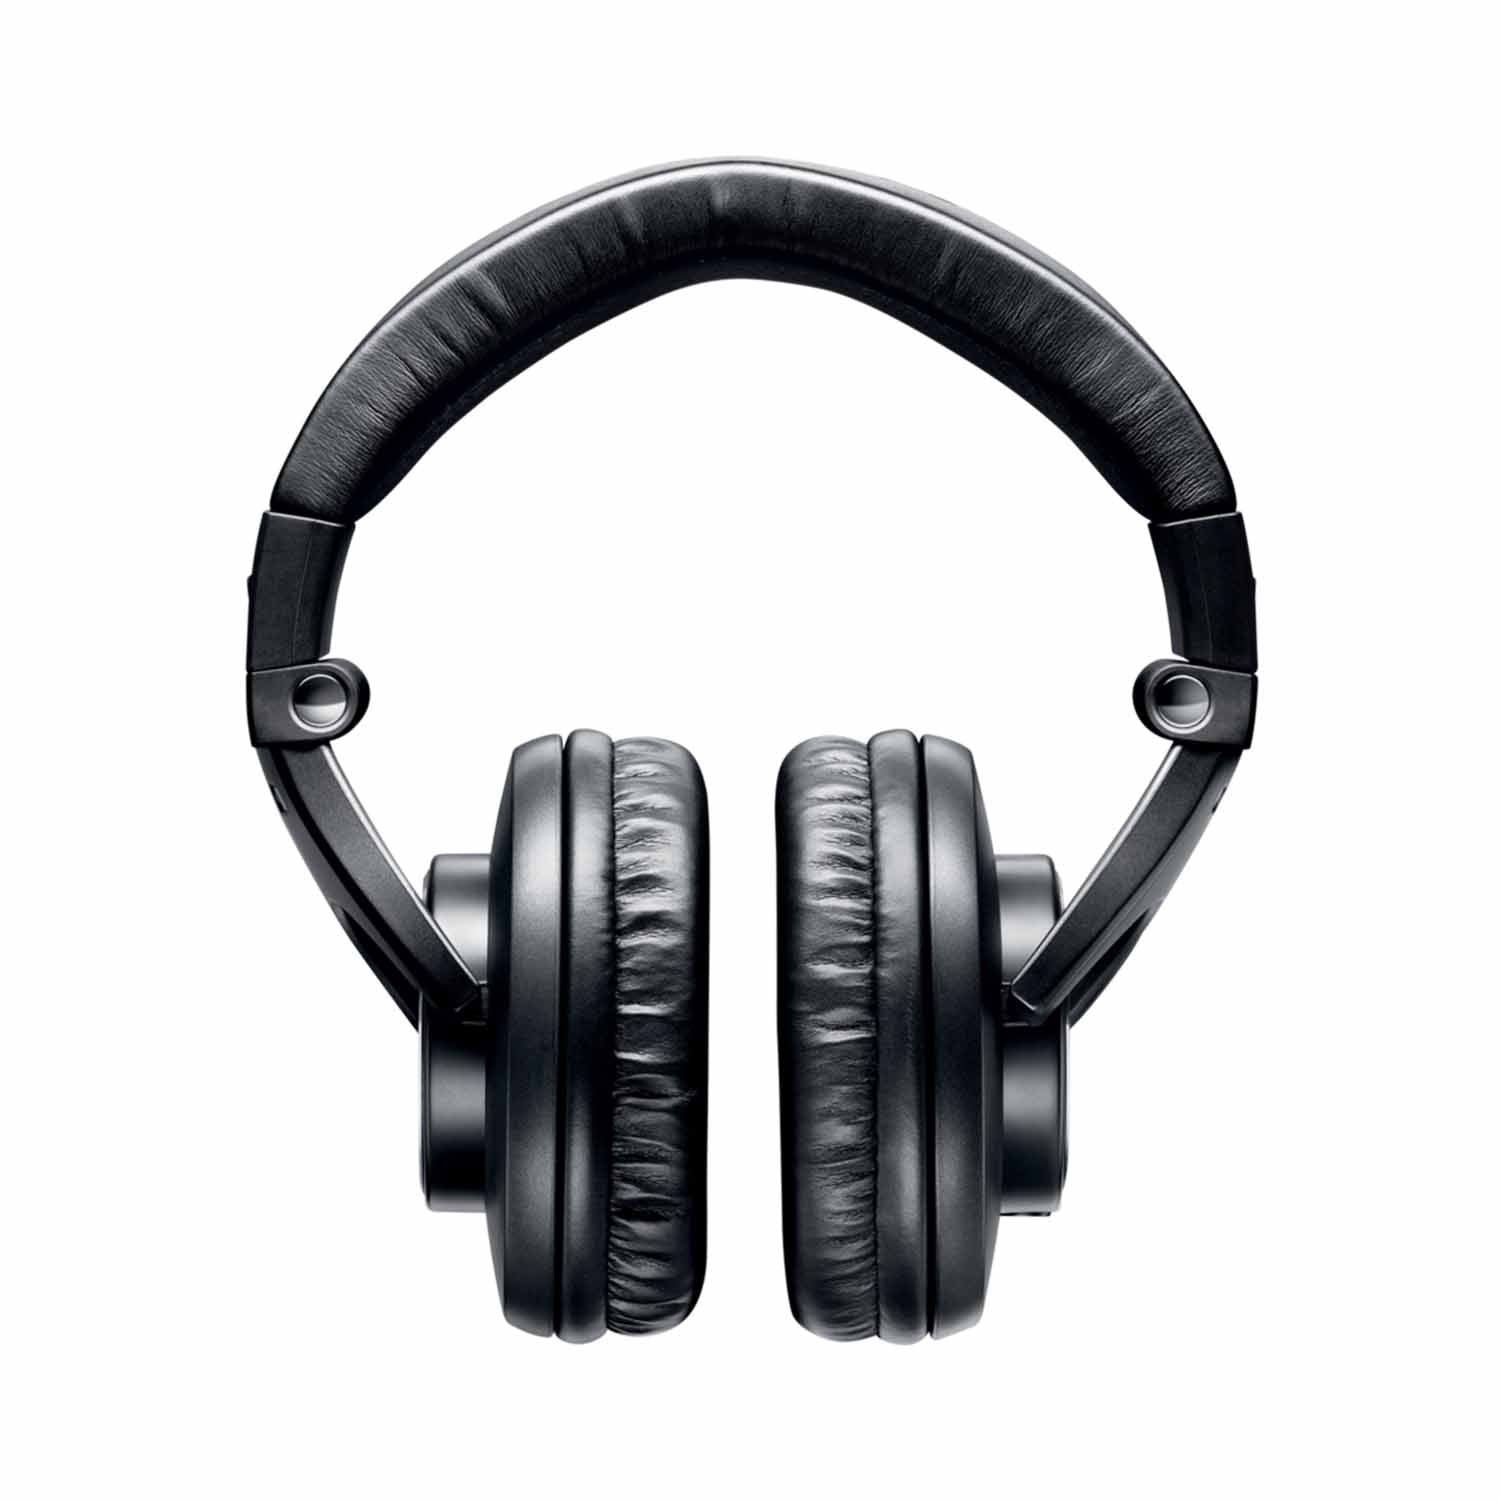 Shure SRH840, Professional Monitoring Studio Headphones - Hollywood DJ